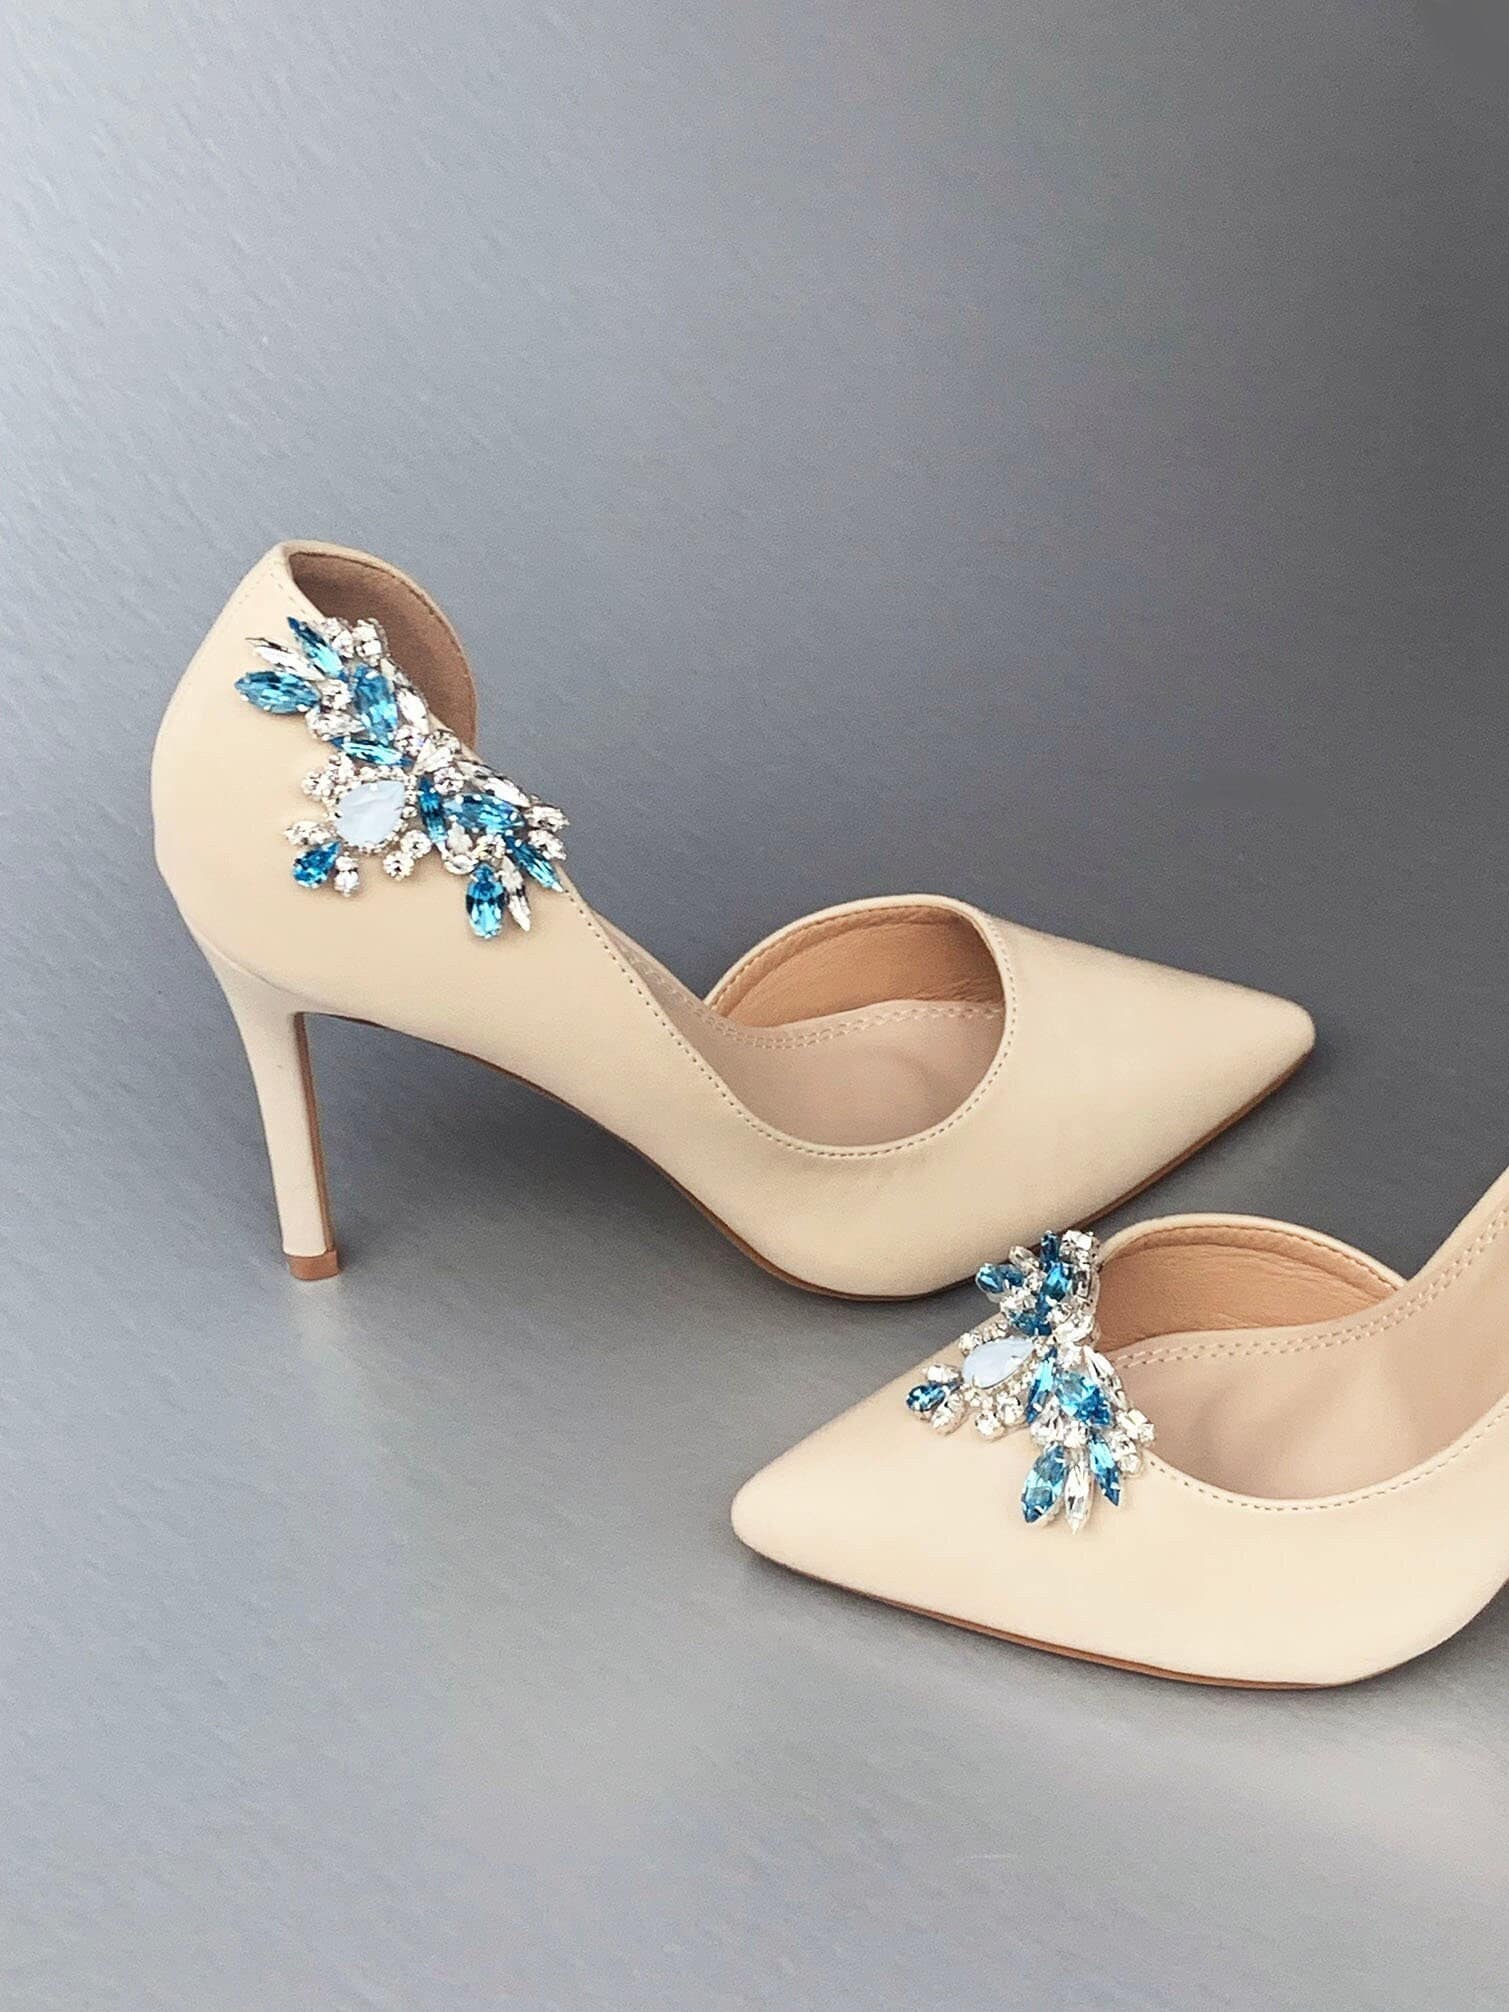 Something blue Shoe clips, Bridal shoe clips, Premium European Crystal Shoe  embellishments jewelry, Rhinestone shoe clip-on light blue